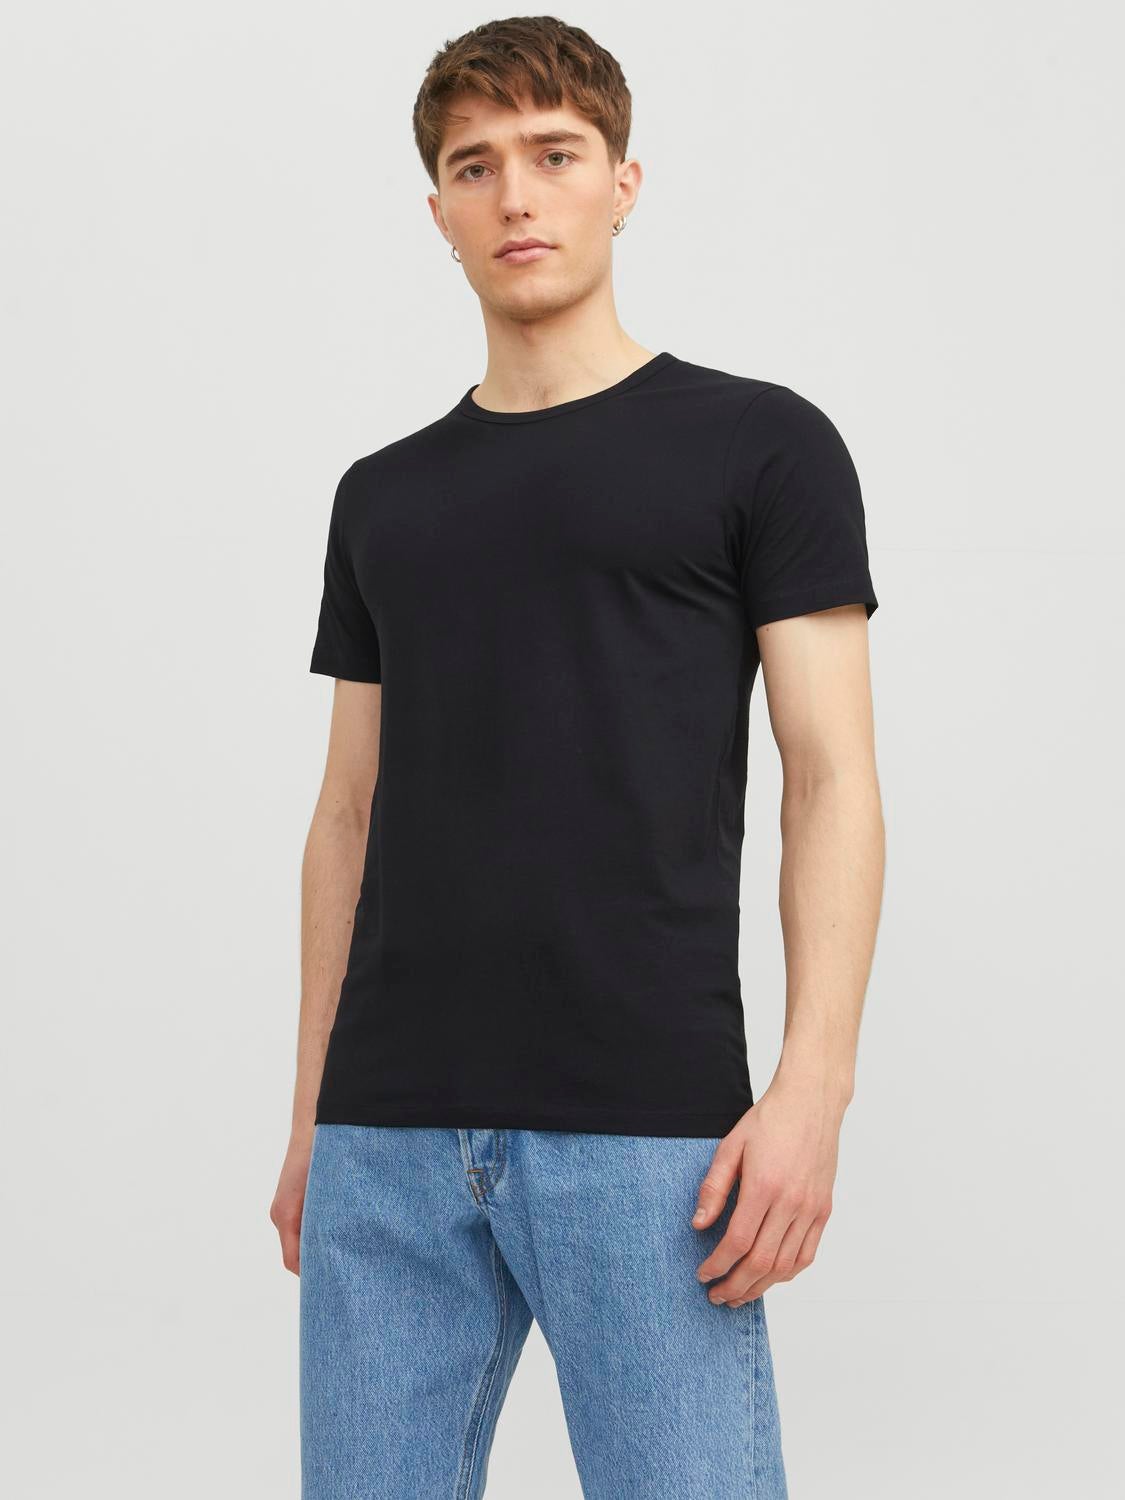 Jack & Jones Shirt discount 77% Black/White M MEN FASHION Shirts & T-shirts Combined 